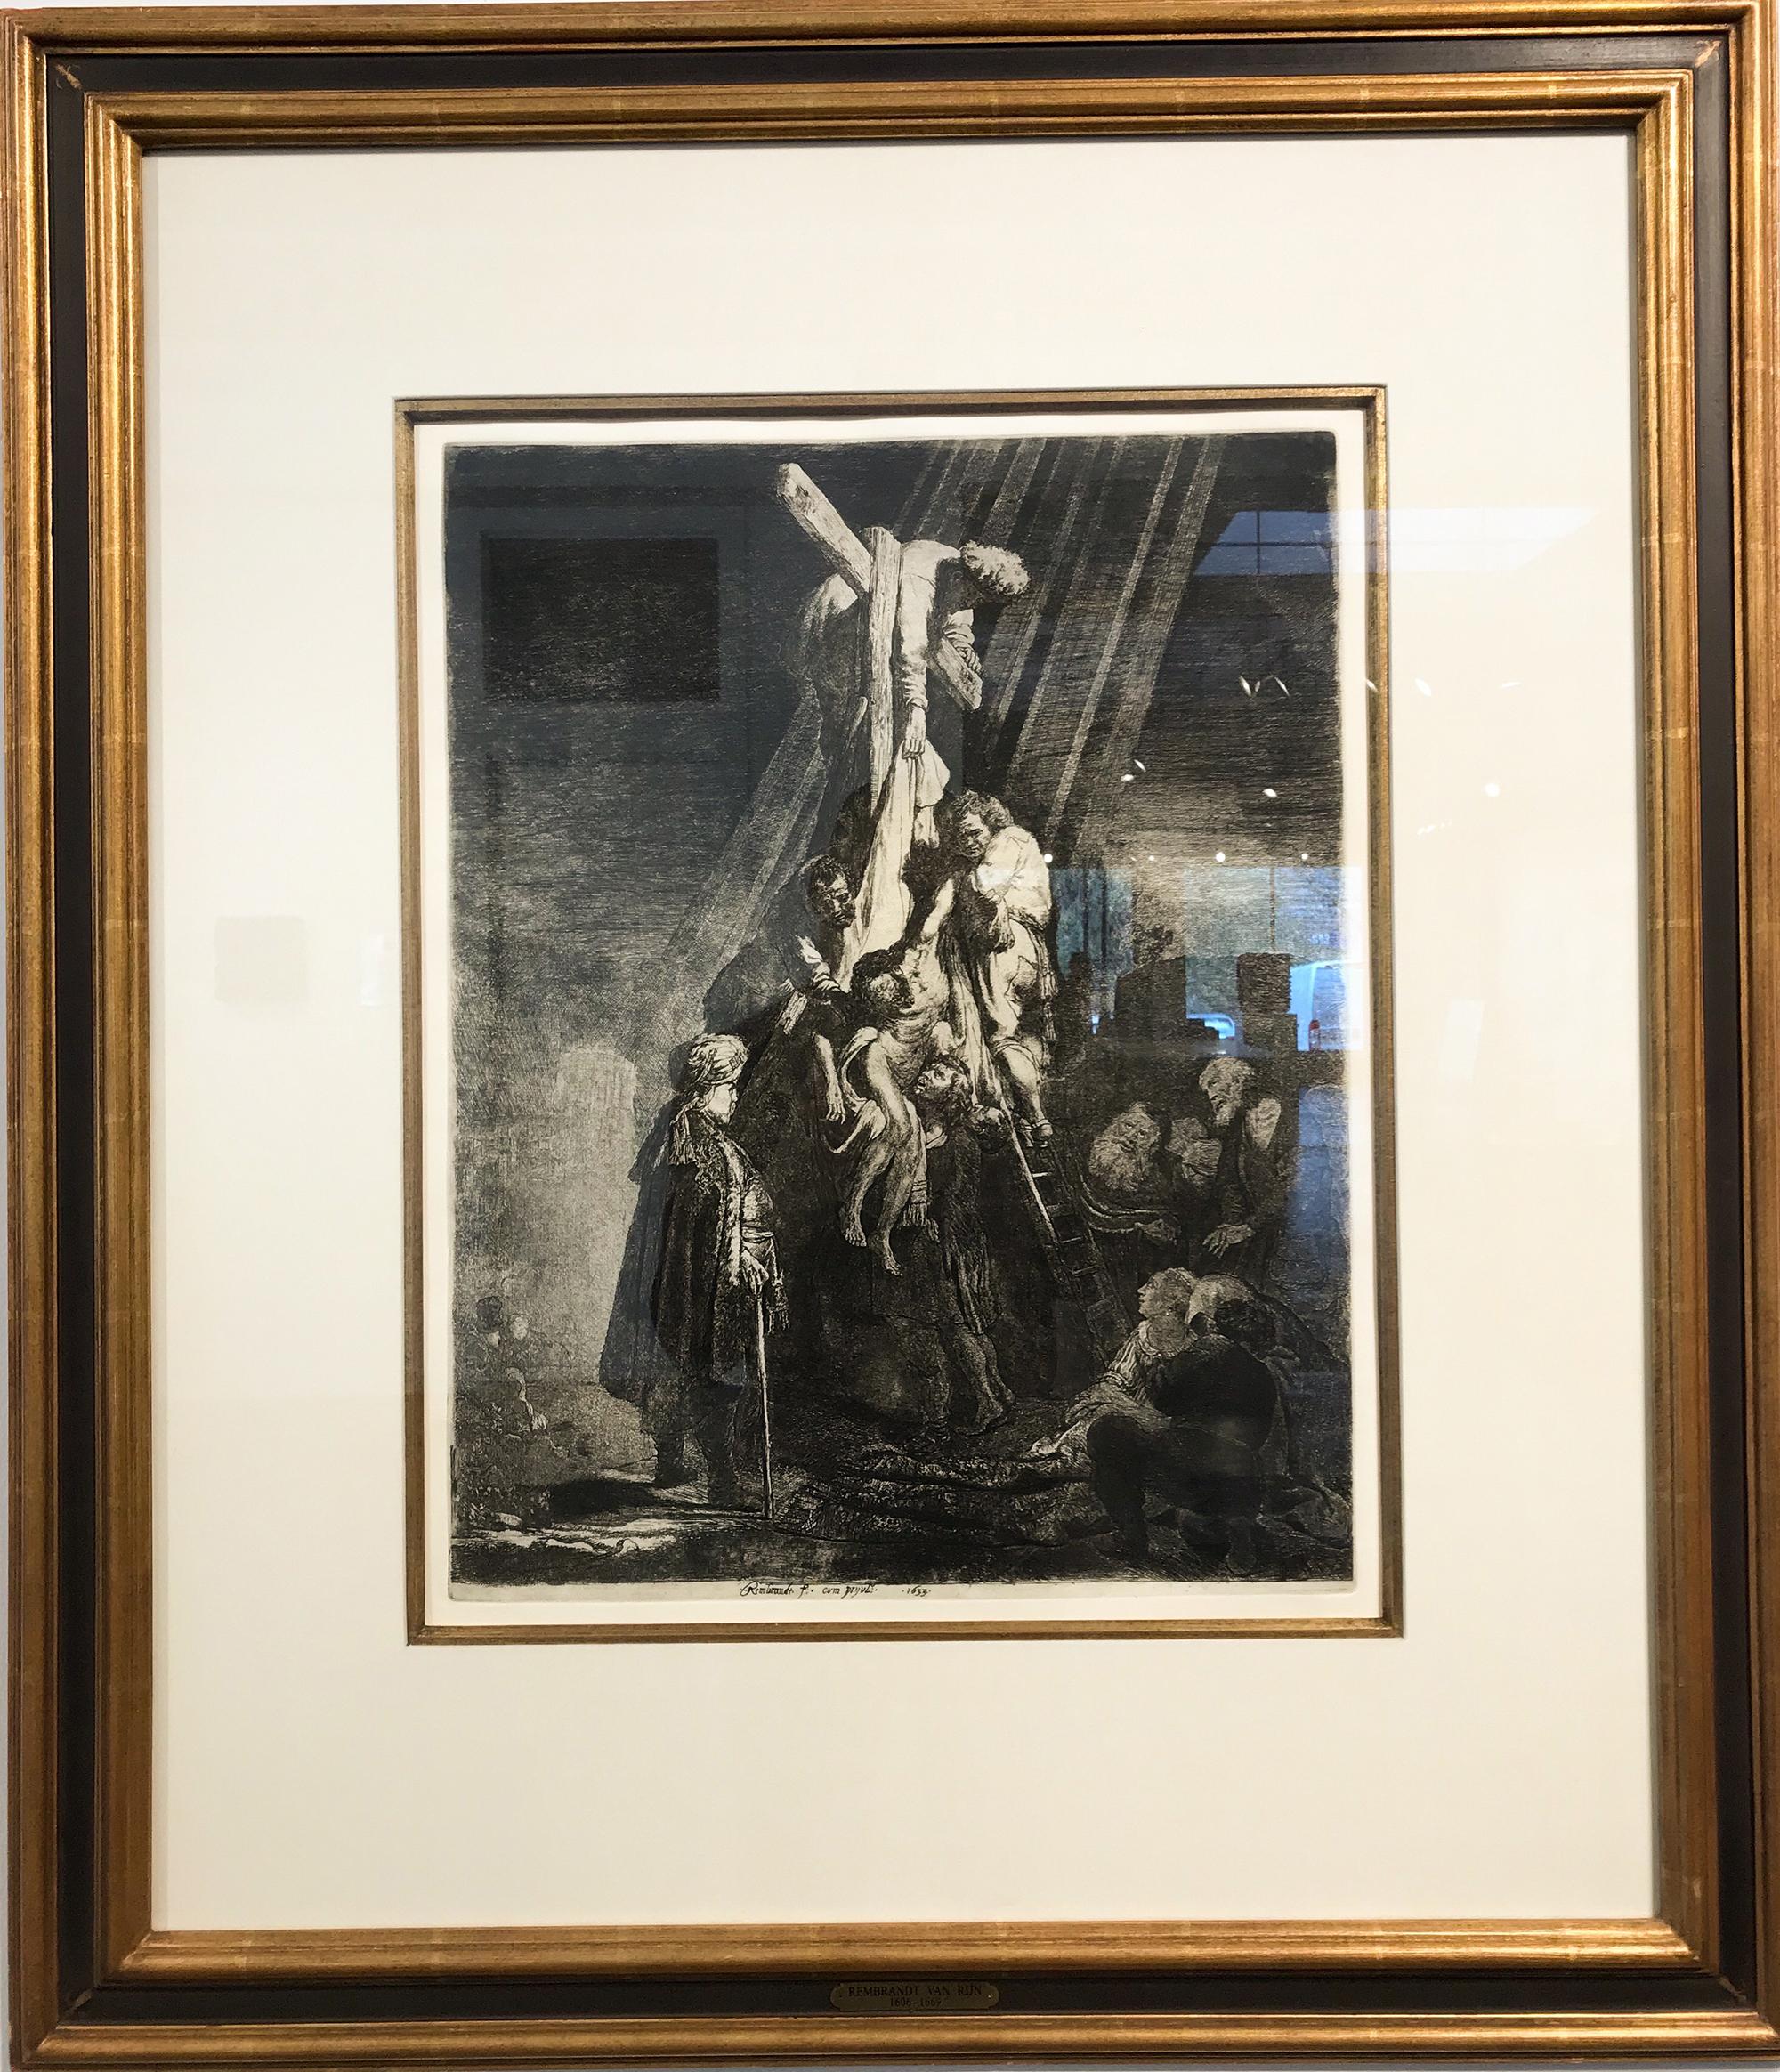 Descent from the Cross, Etching - Print by Rembrandt van Rijn